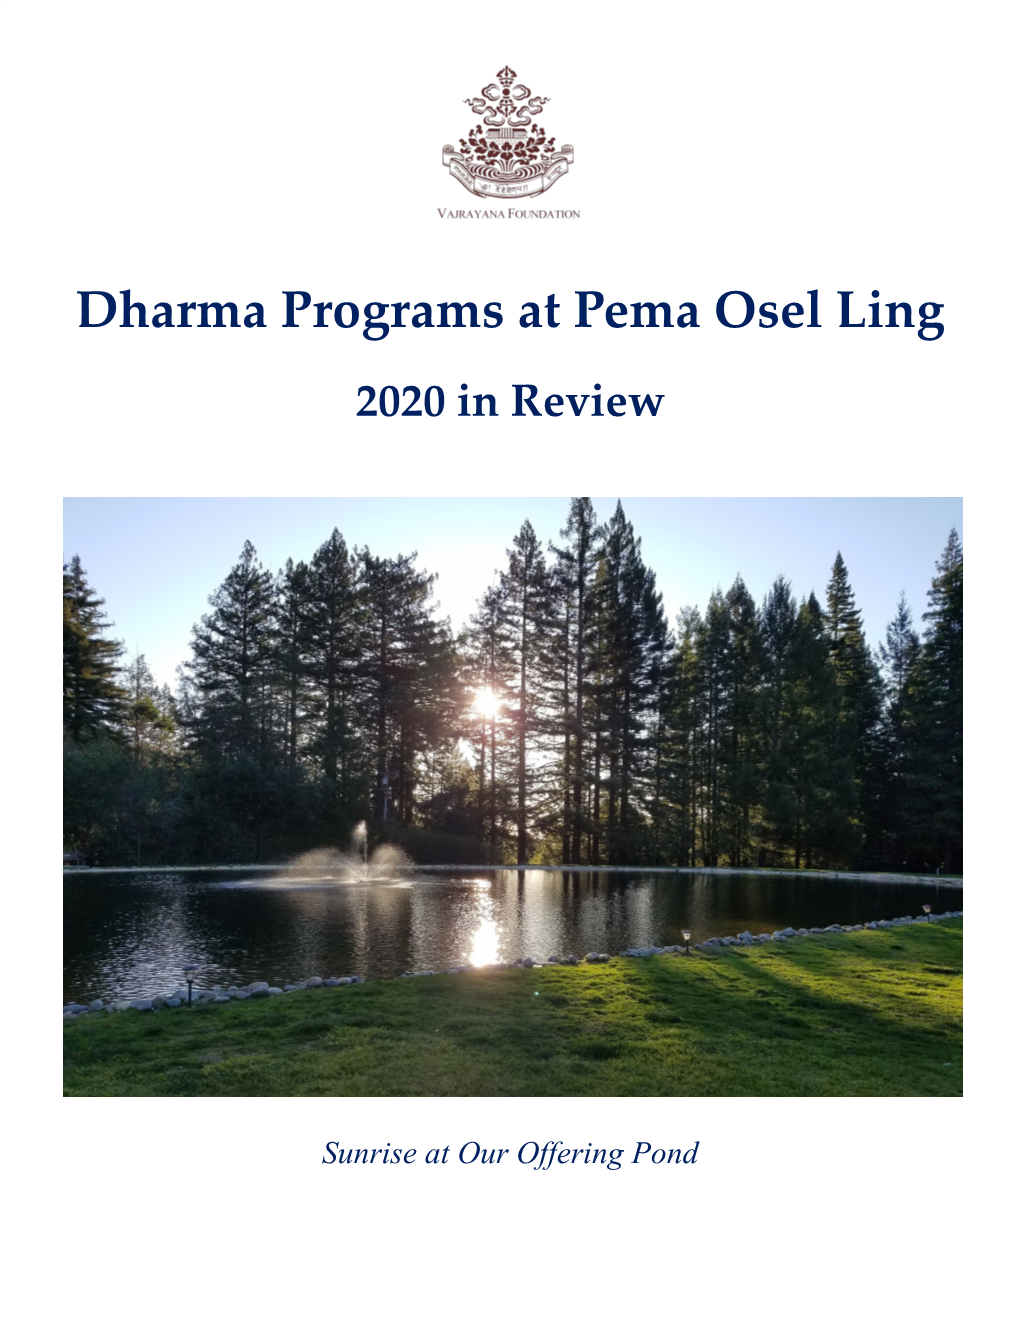 Dharma Programs at Pema Osel Ling 2020 in Review